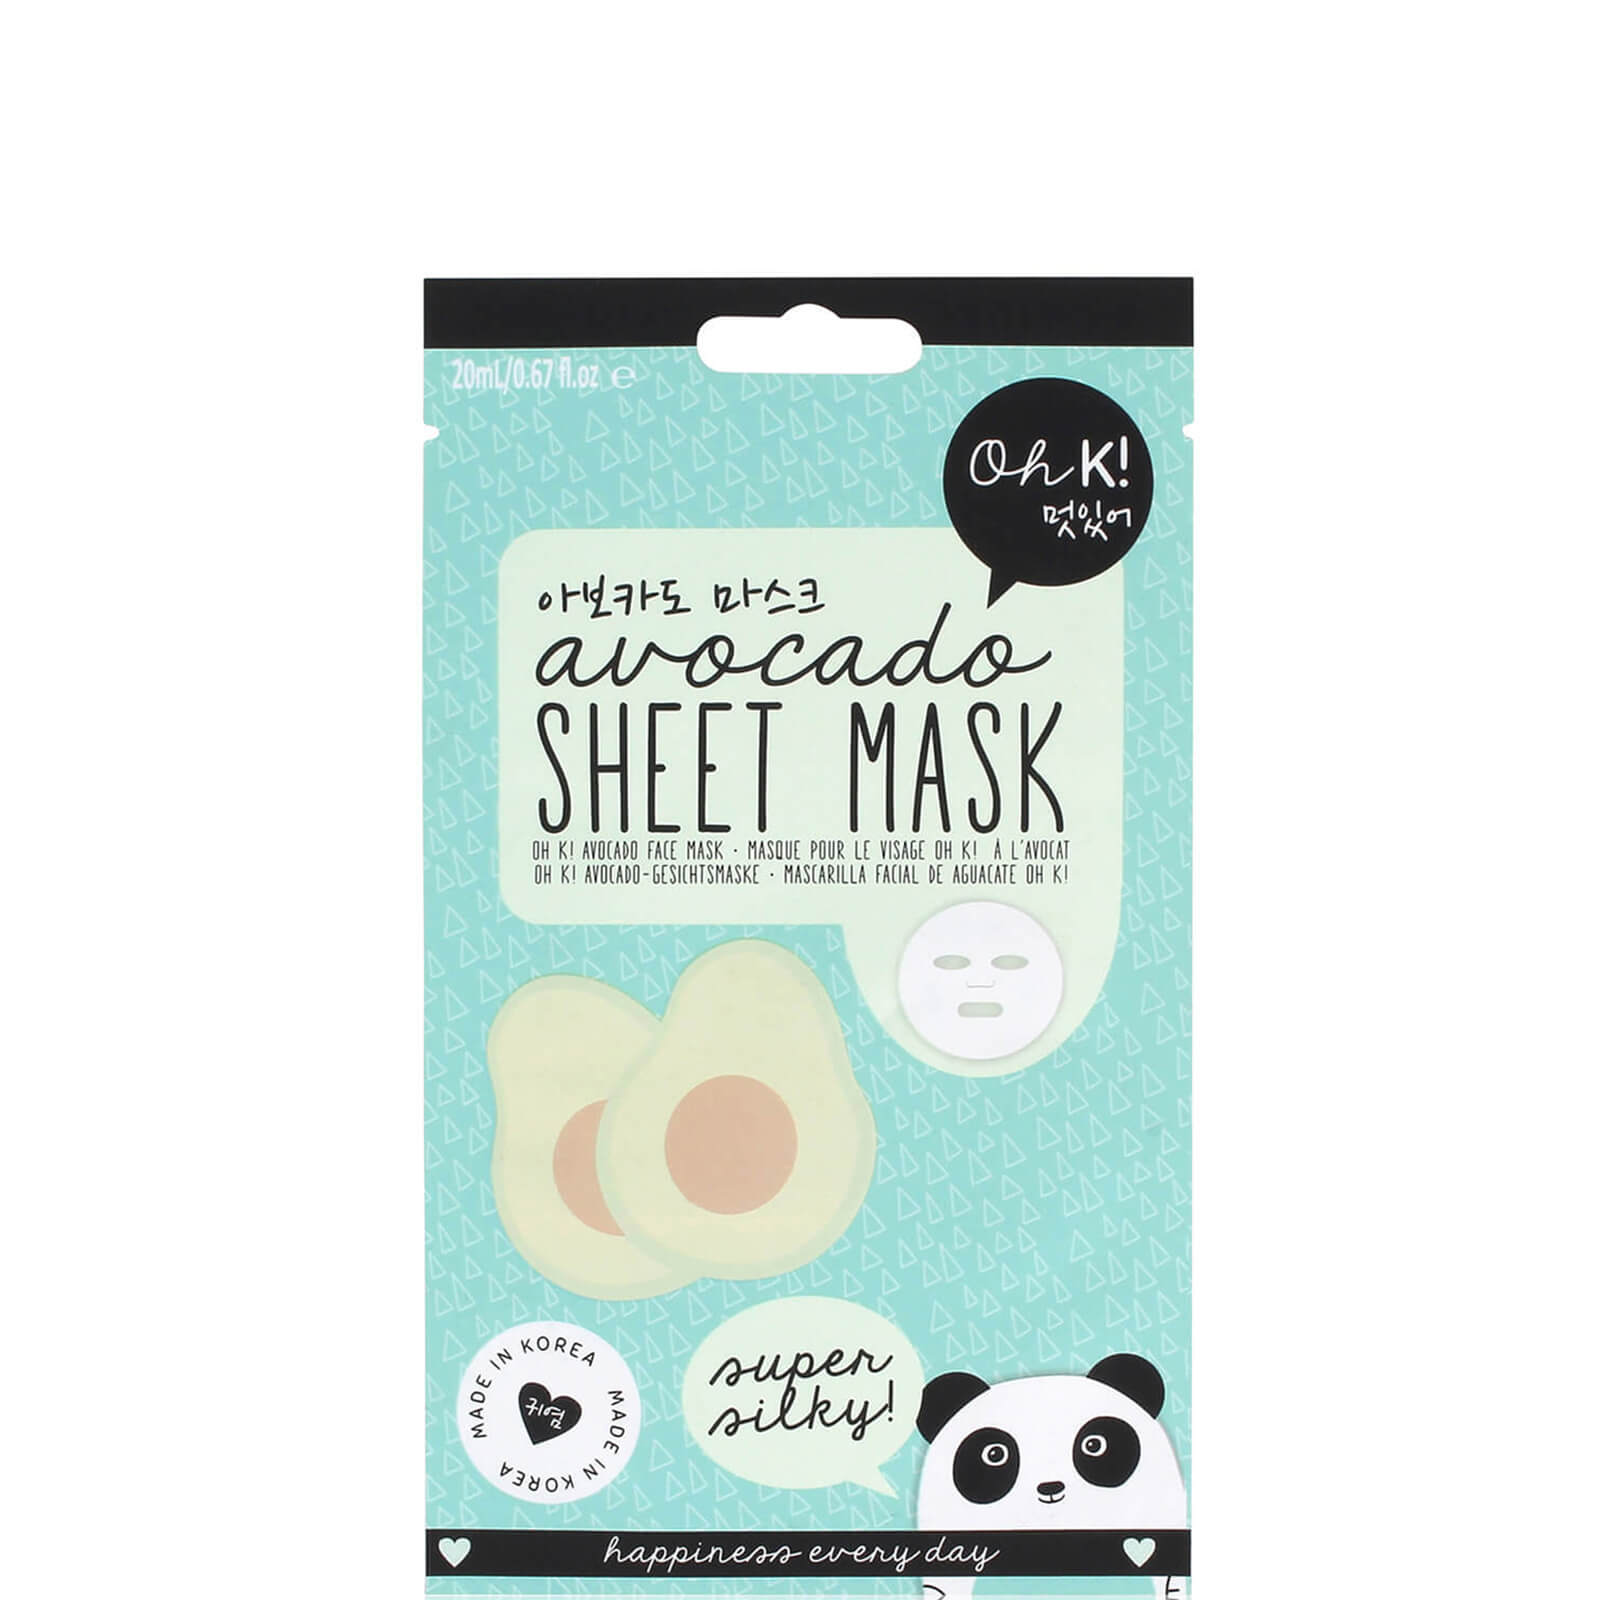 oh k! avocado sheet mask 23ml